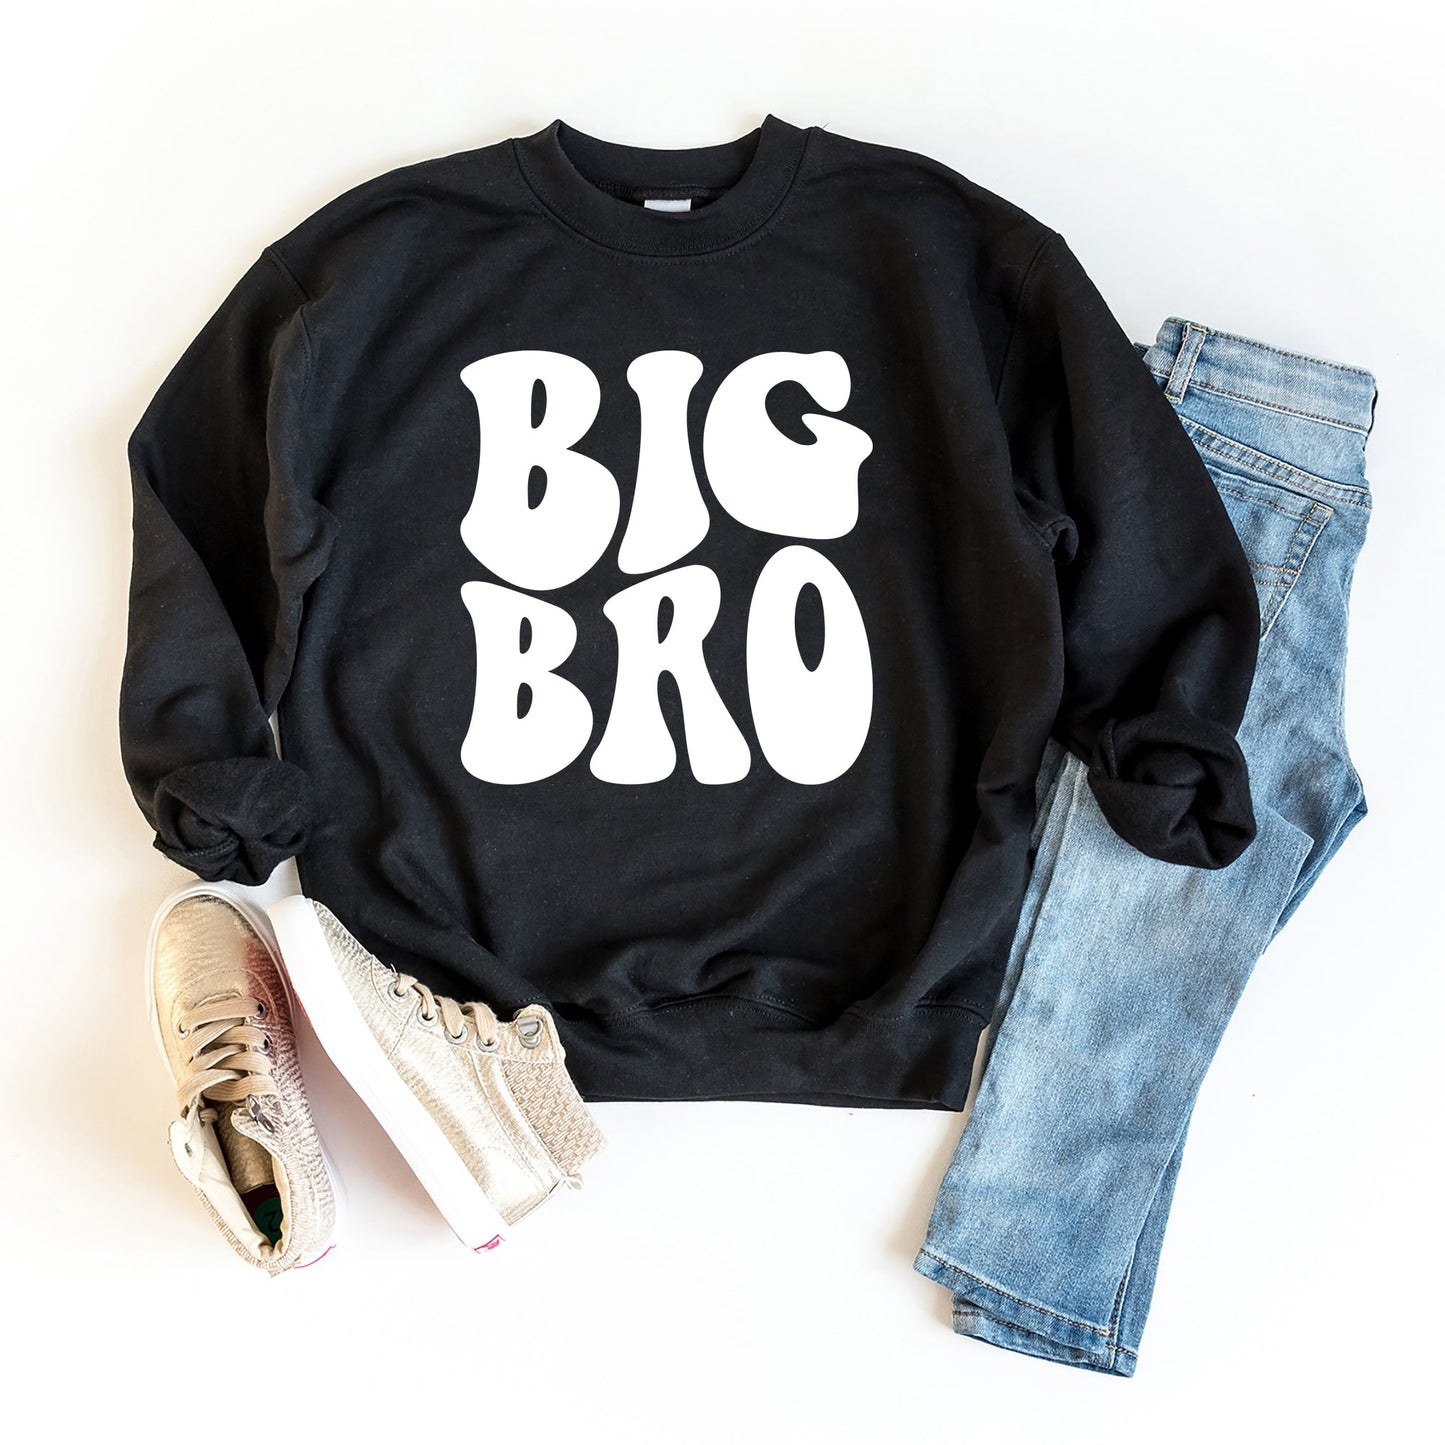 Big Bro Wavy | Youth Graphic Sweatshirt